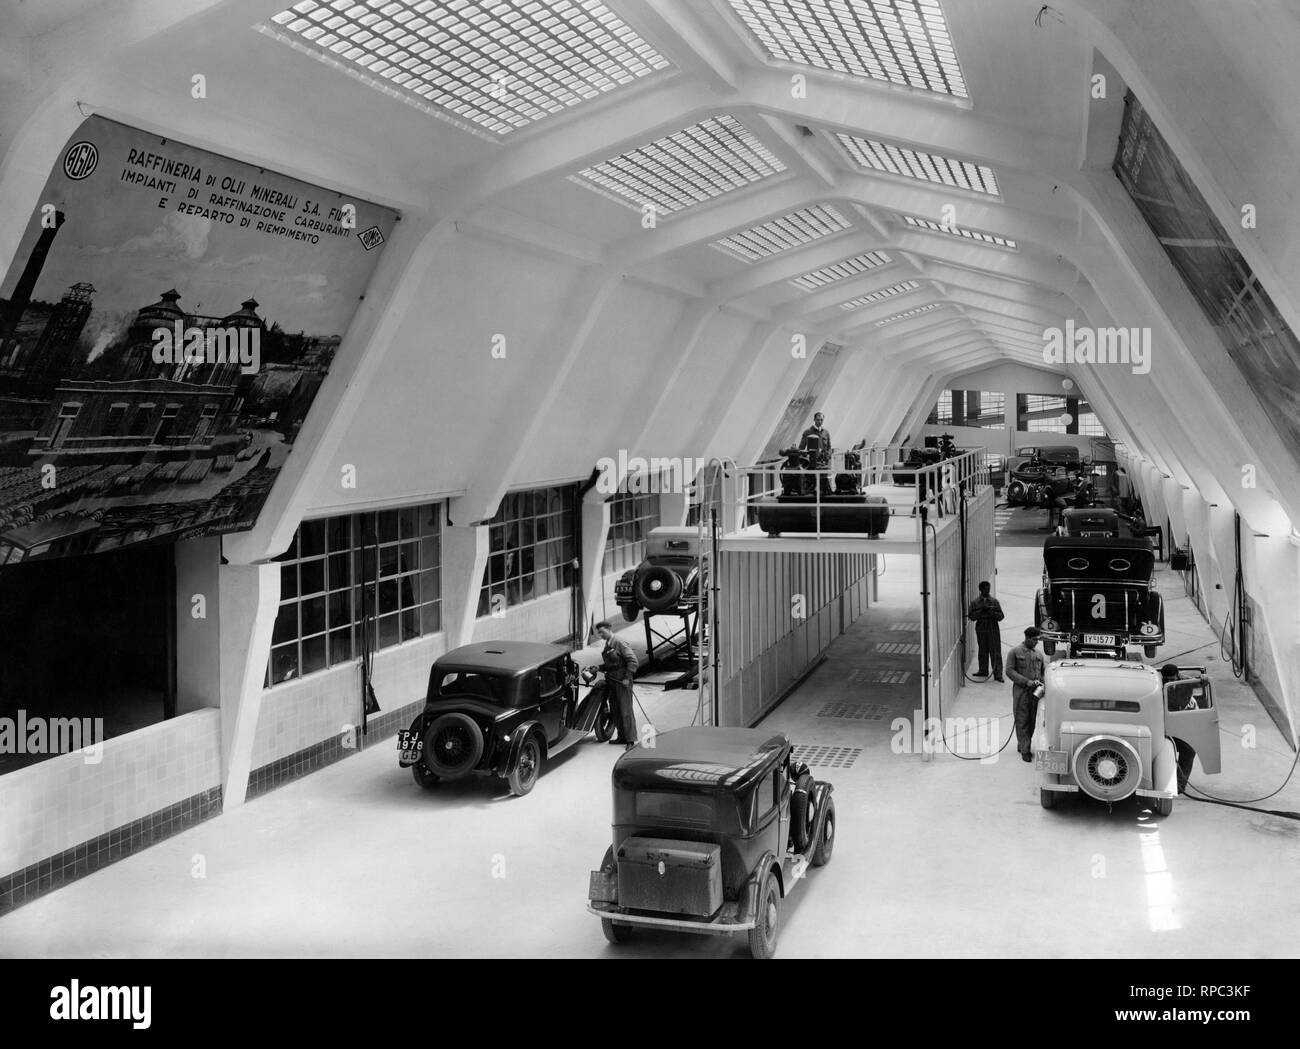 agip garage, venice 1920-30 Stock Photo